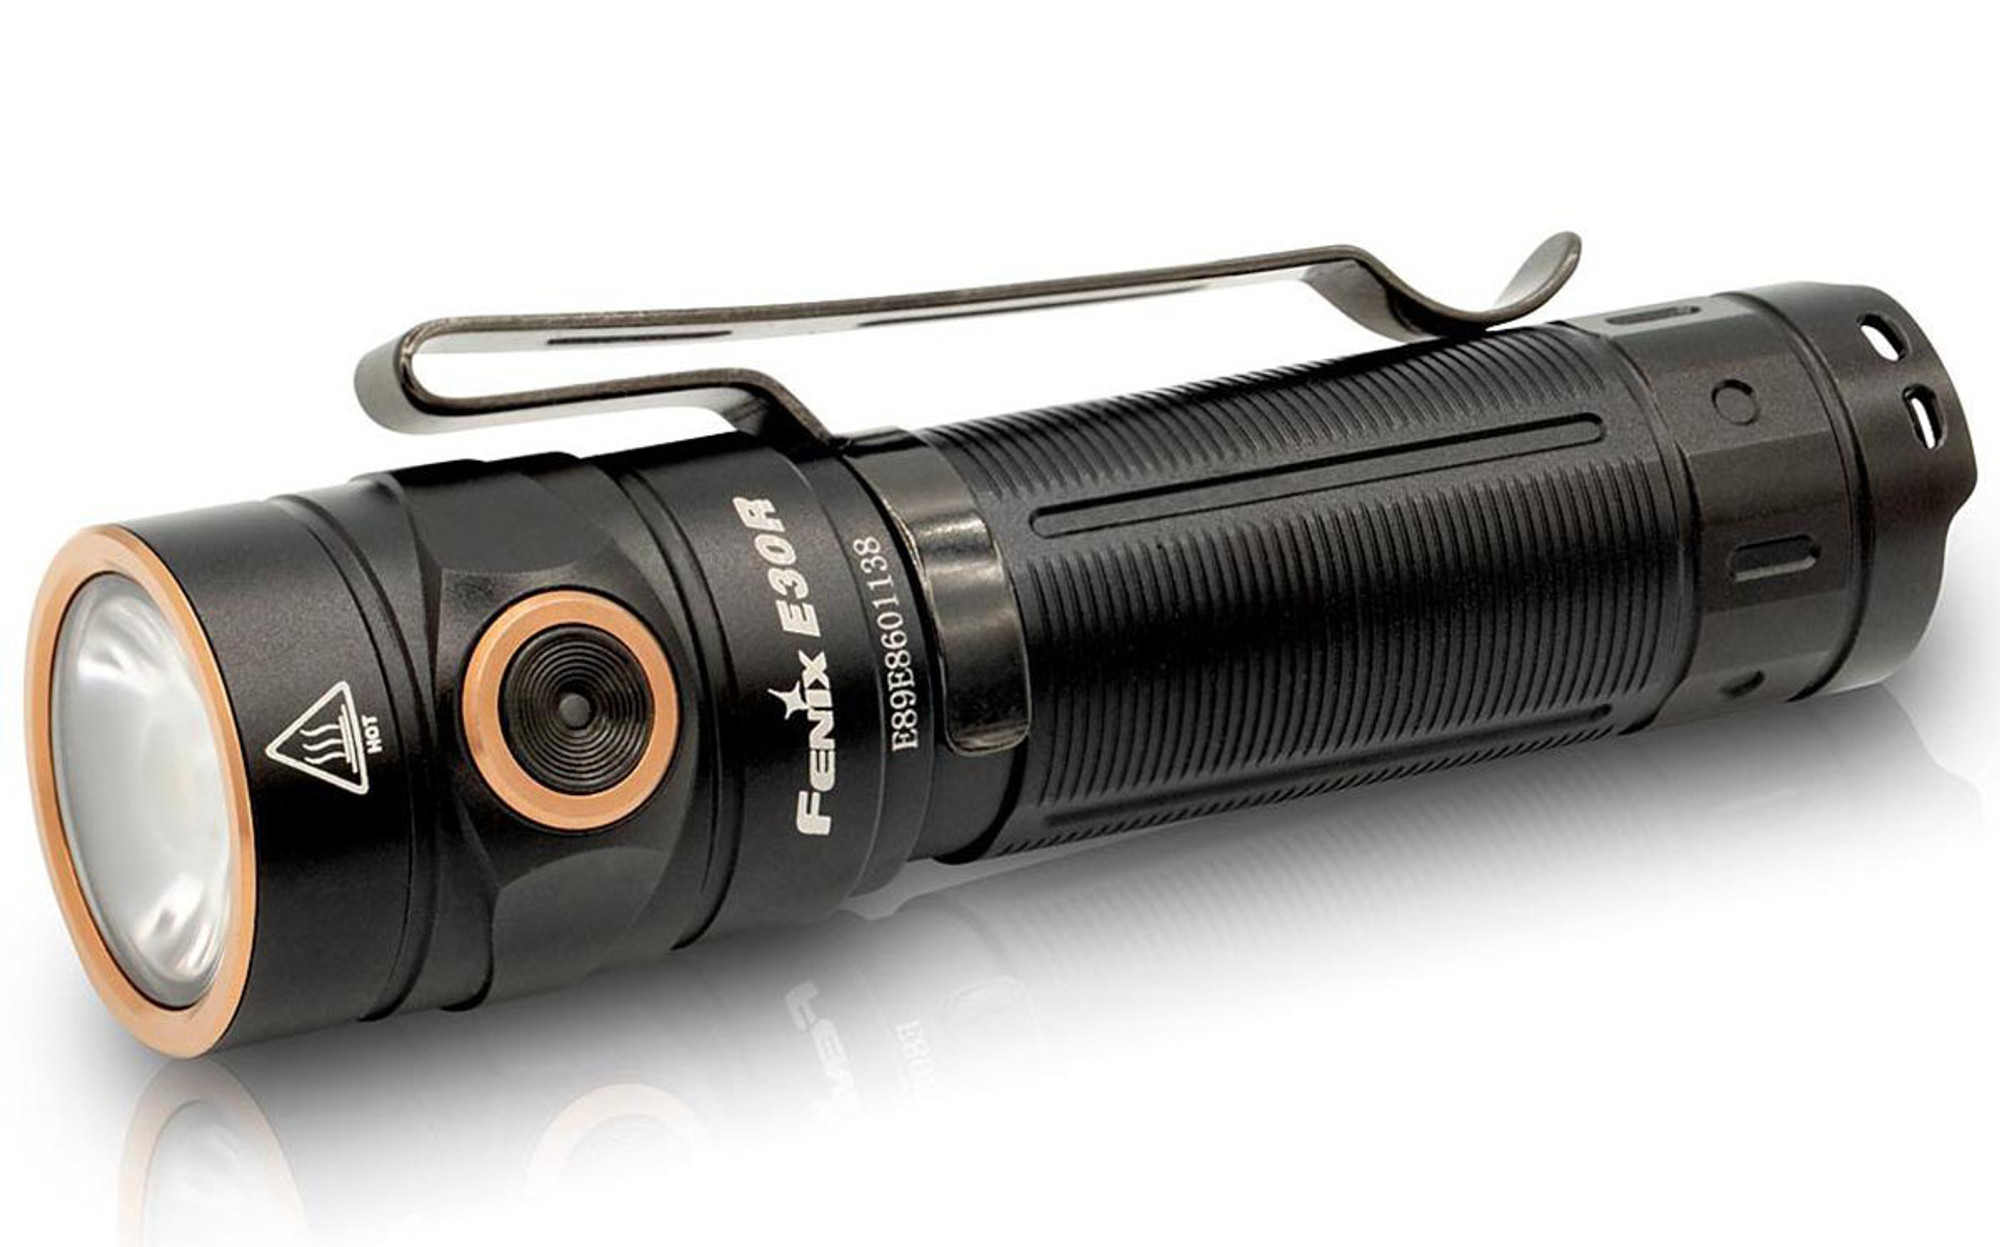 Fenix E30R Rechargeable Flashlight